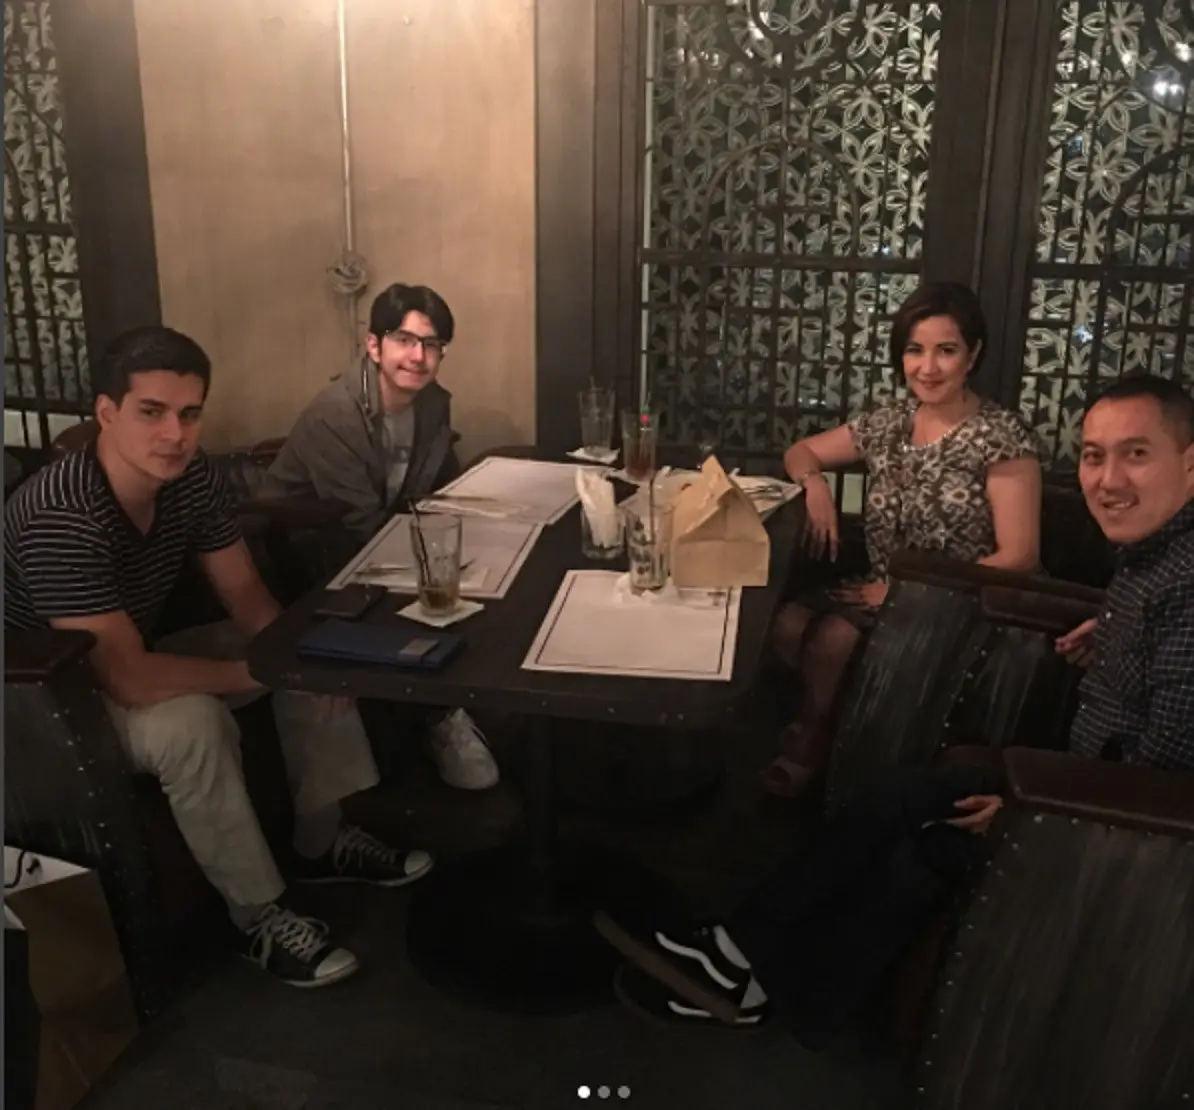 Andi Soraya bersama sosok yang disebut-sebut bernama Ali Gaffar, suami Andi Soraya. Mereka sedang makan bersama dengan Steve Emmanuel dan Darren. (Instagram @andisorayabeatrix)